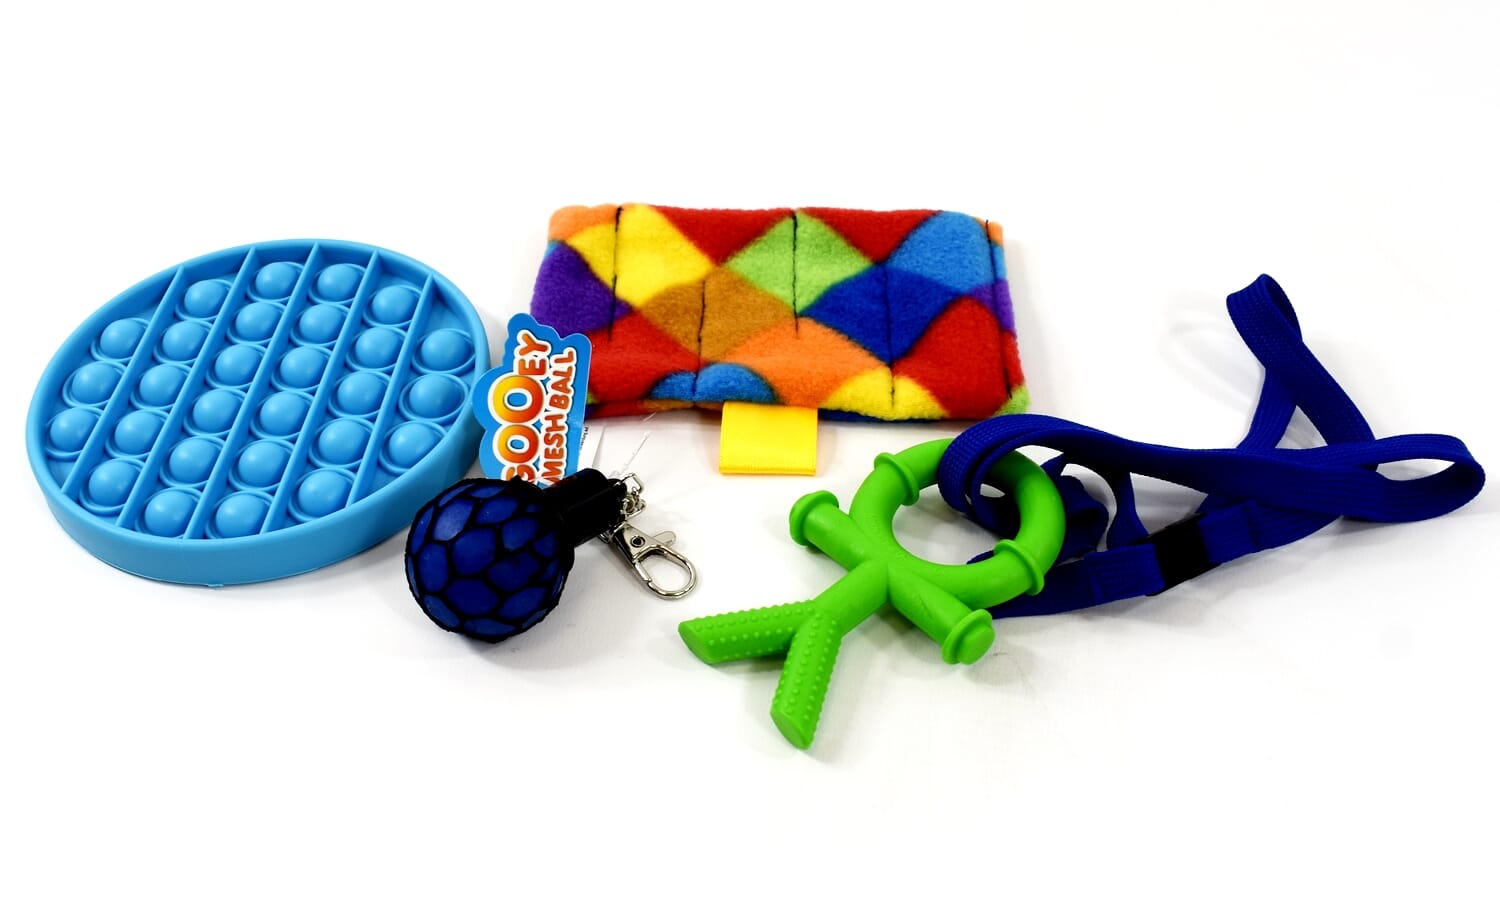 MARMO Fidget Toy anti ansia allevia lo stress Fidget Autismo ADHD terapia UK 